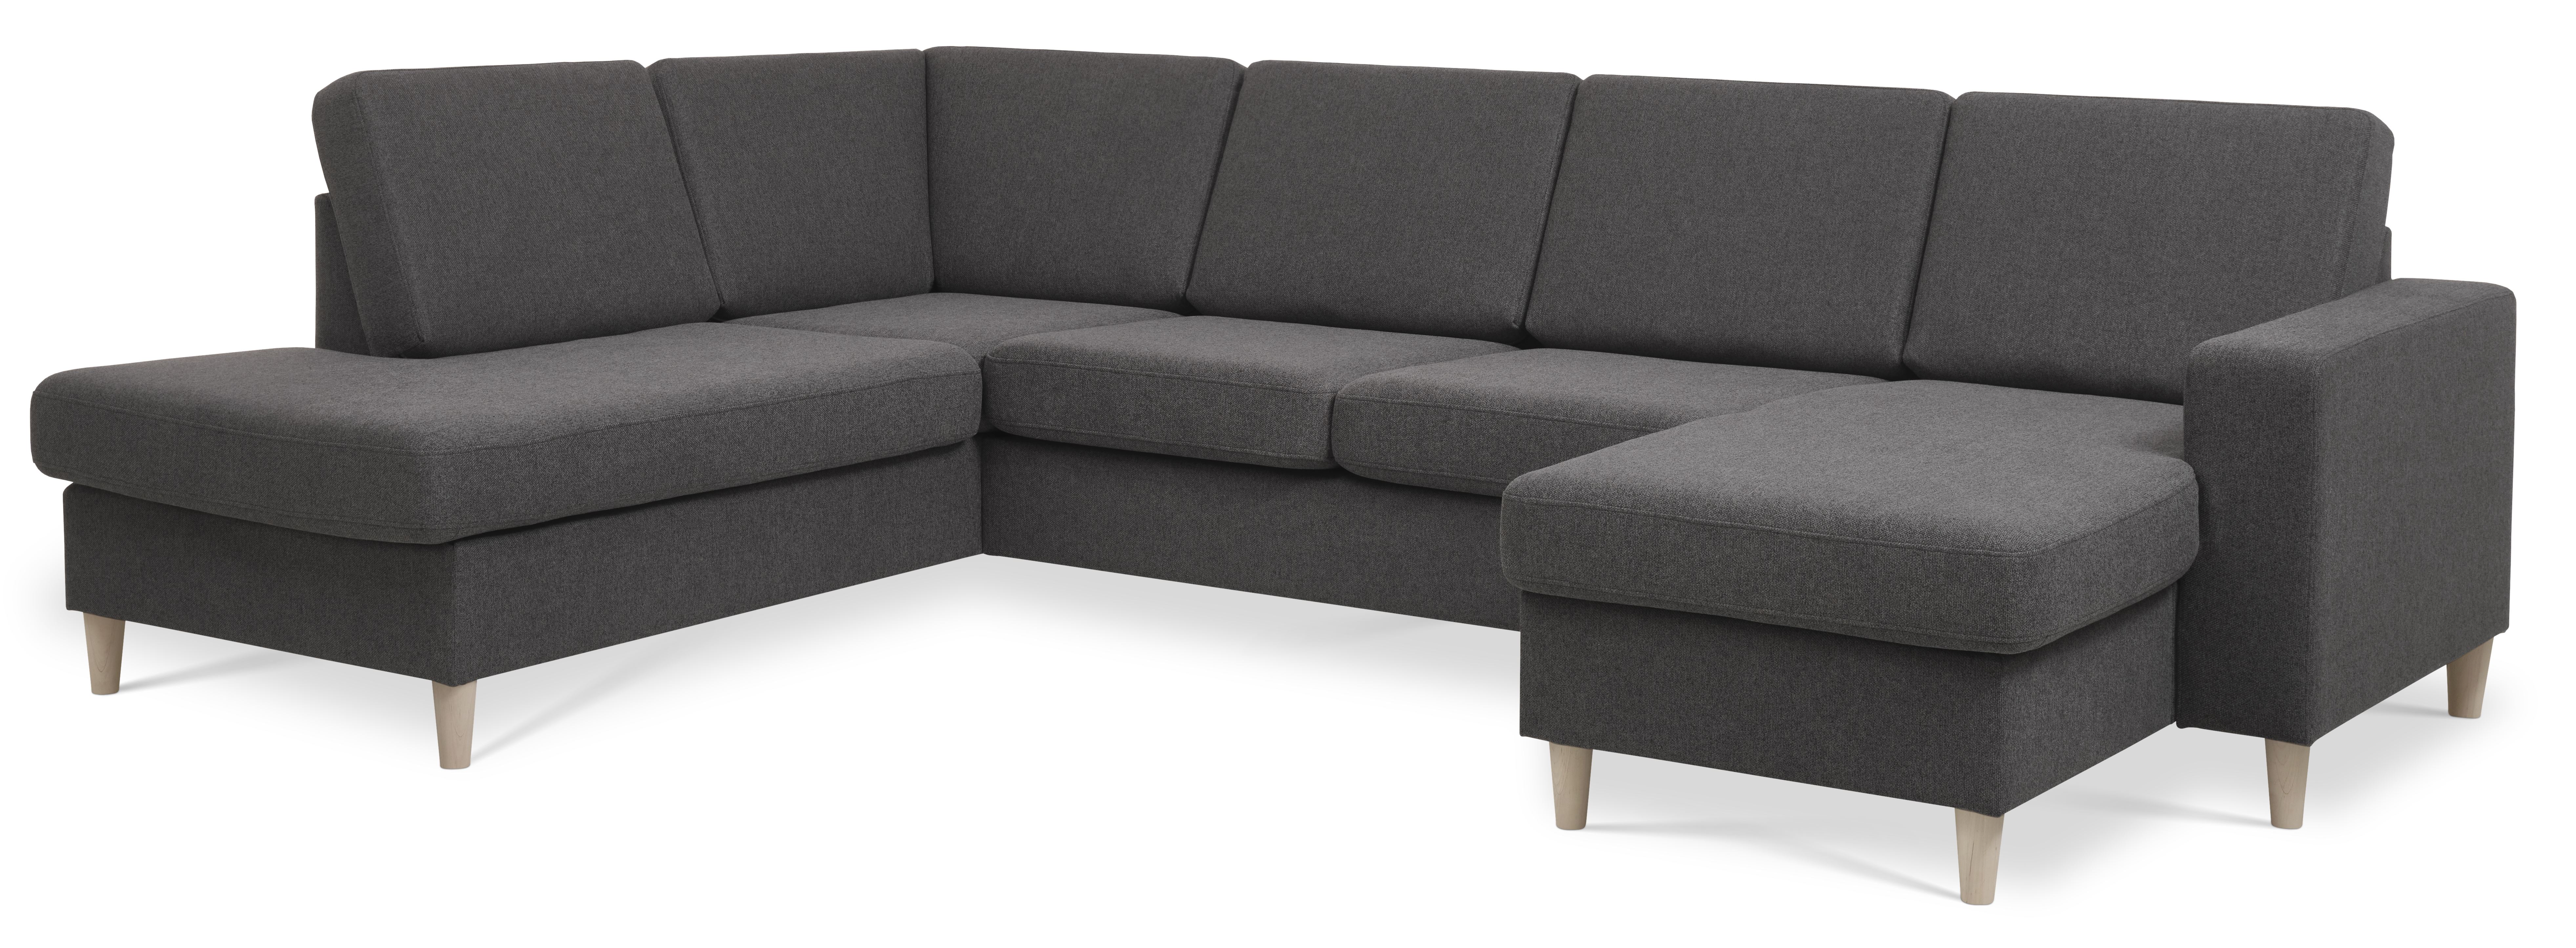 Pan set 4 U OE left sofa med chaiselong - antracitgrå polyester stof og natur træ